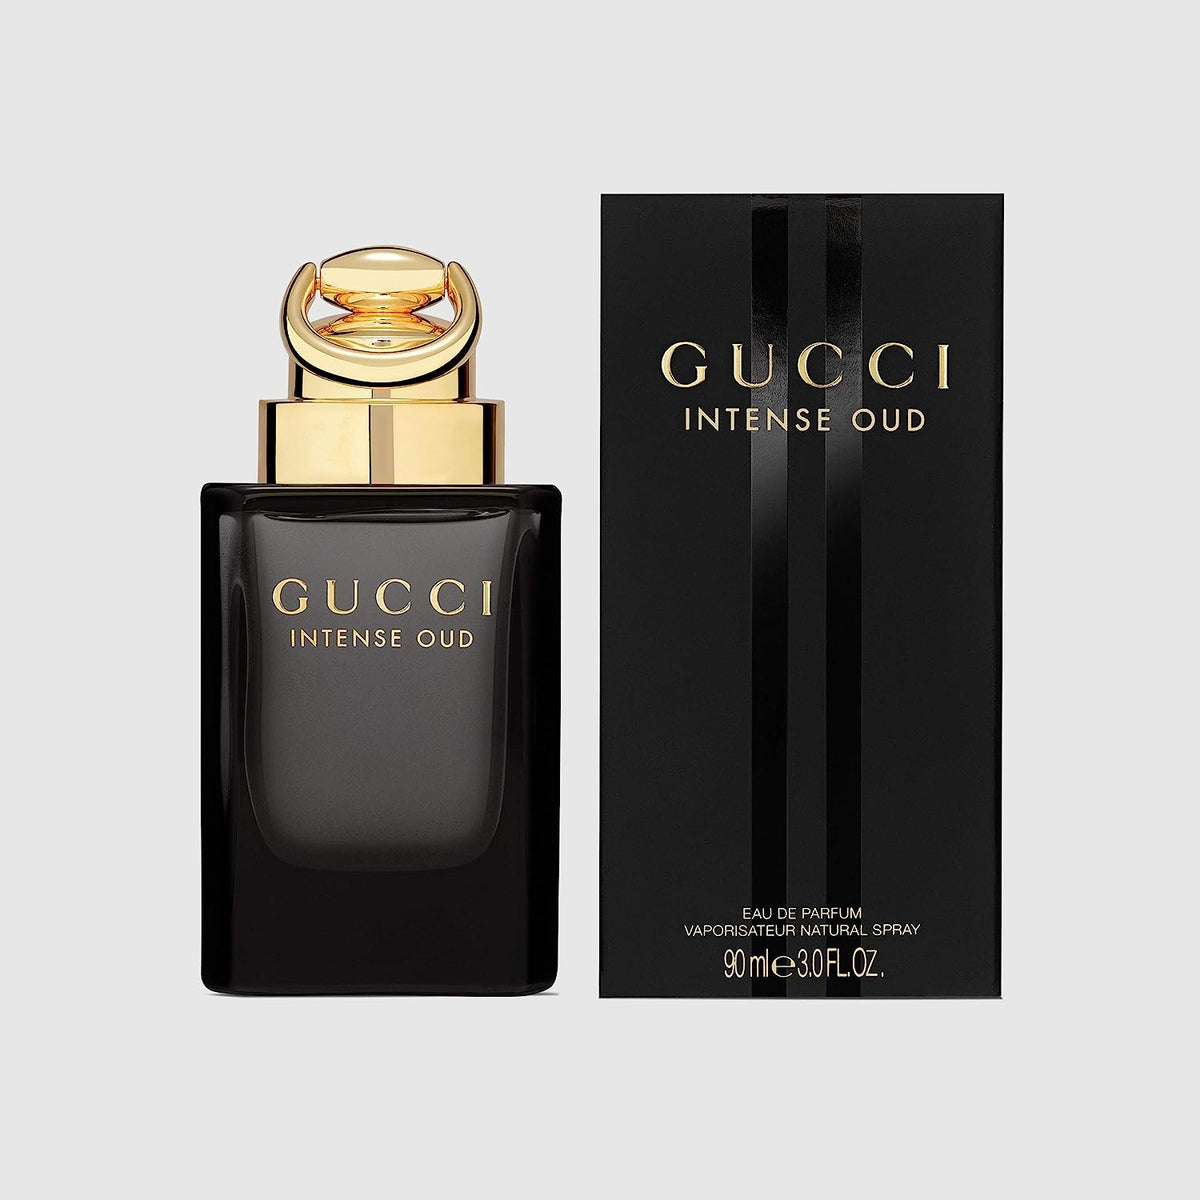 Gucci Intense Oud Eau De Parfum Vaporisateur Natural Spray (90ml) Beautiful